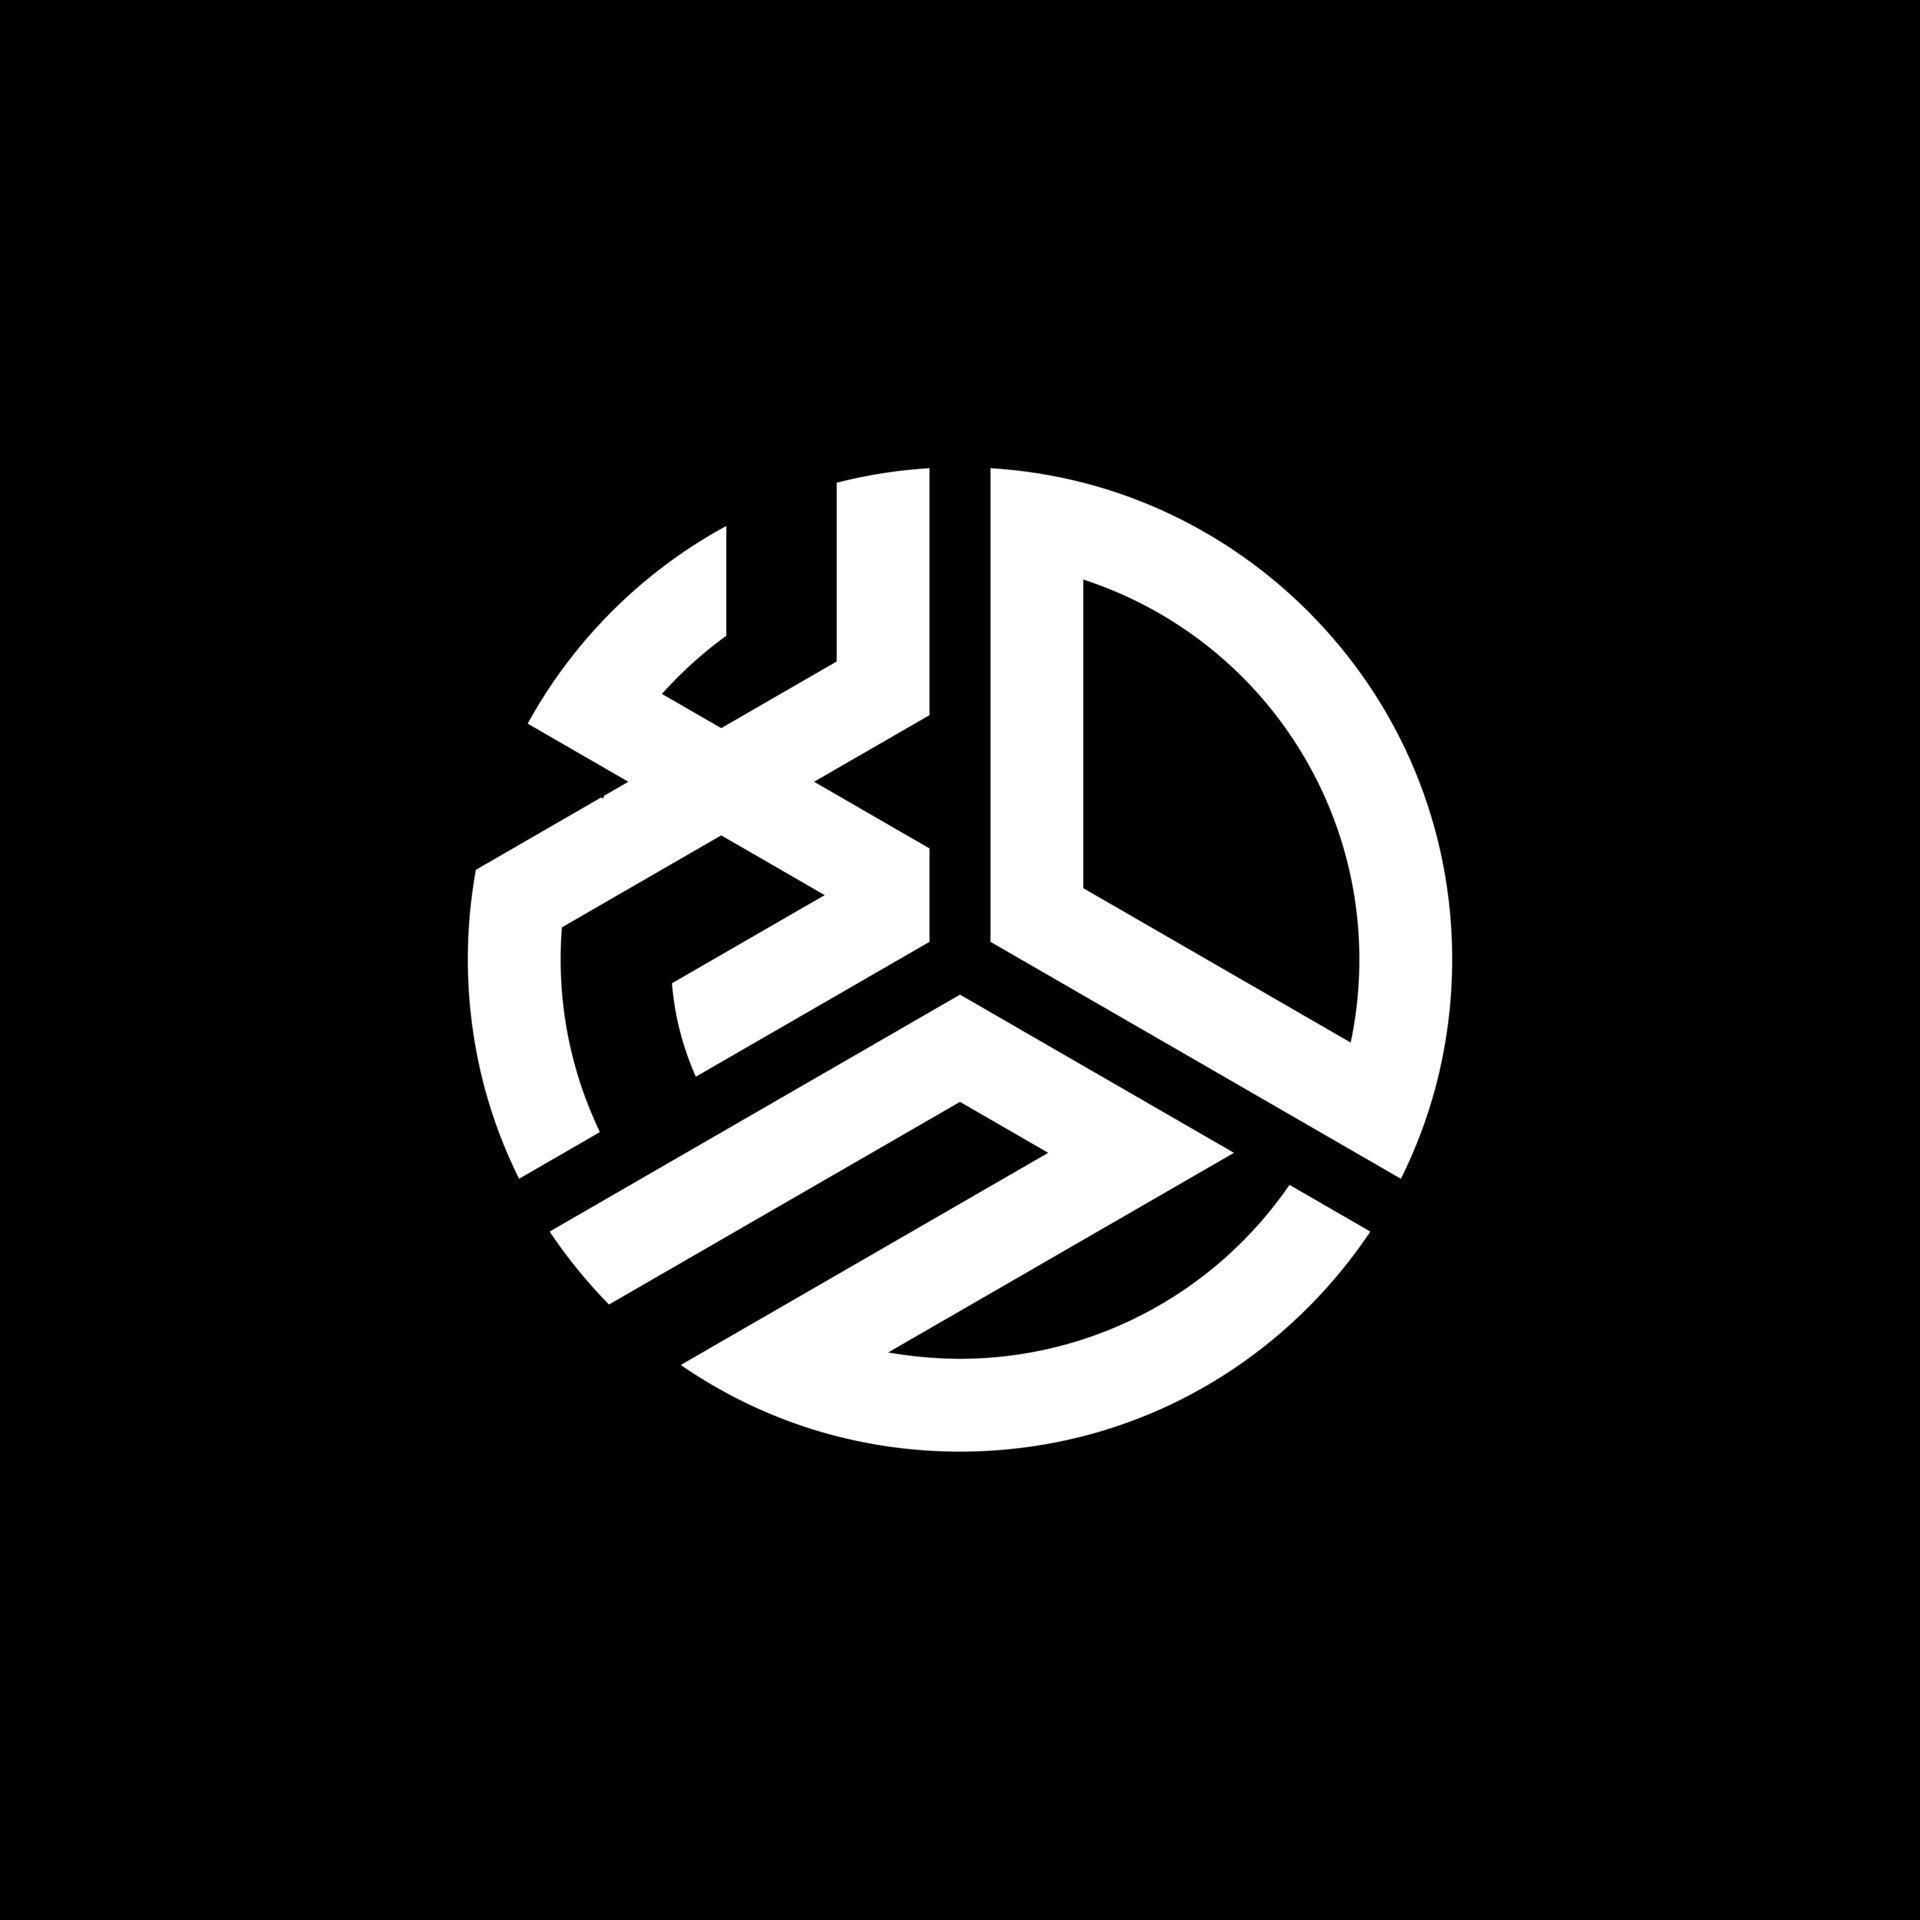 xoz brief logo ontwerp op zwarte achtergrond. xoz creatieve initialen brief logo concept. xoz brief ontwerp. vector